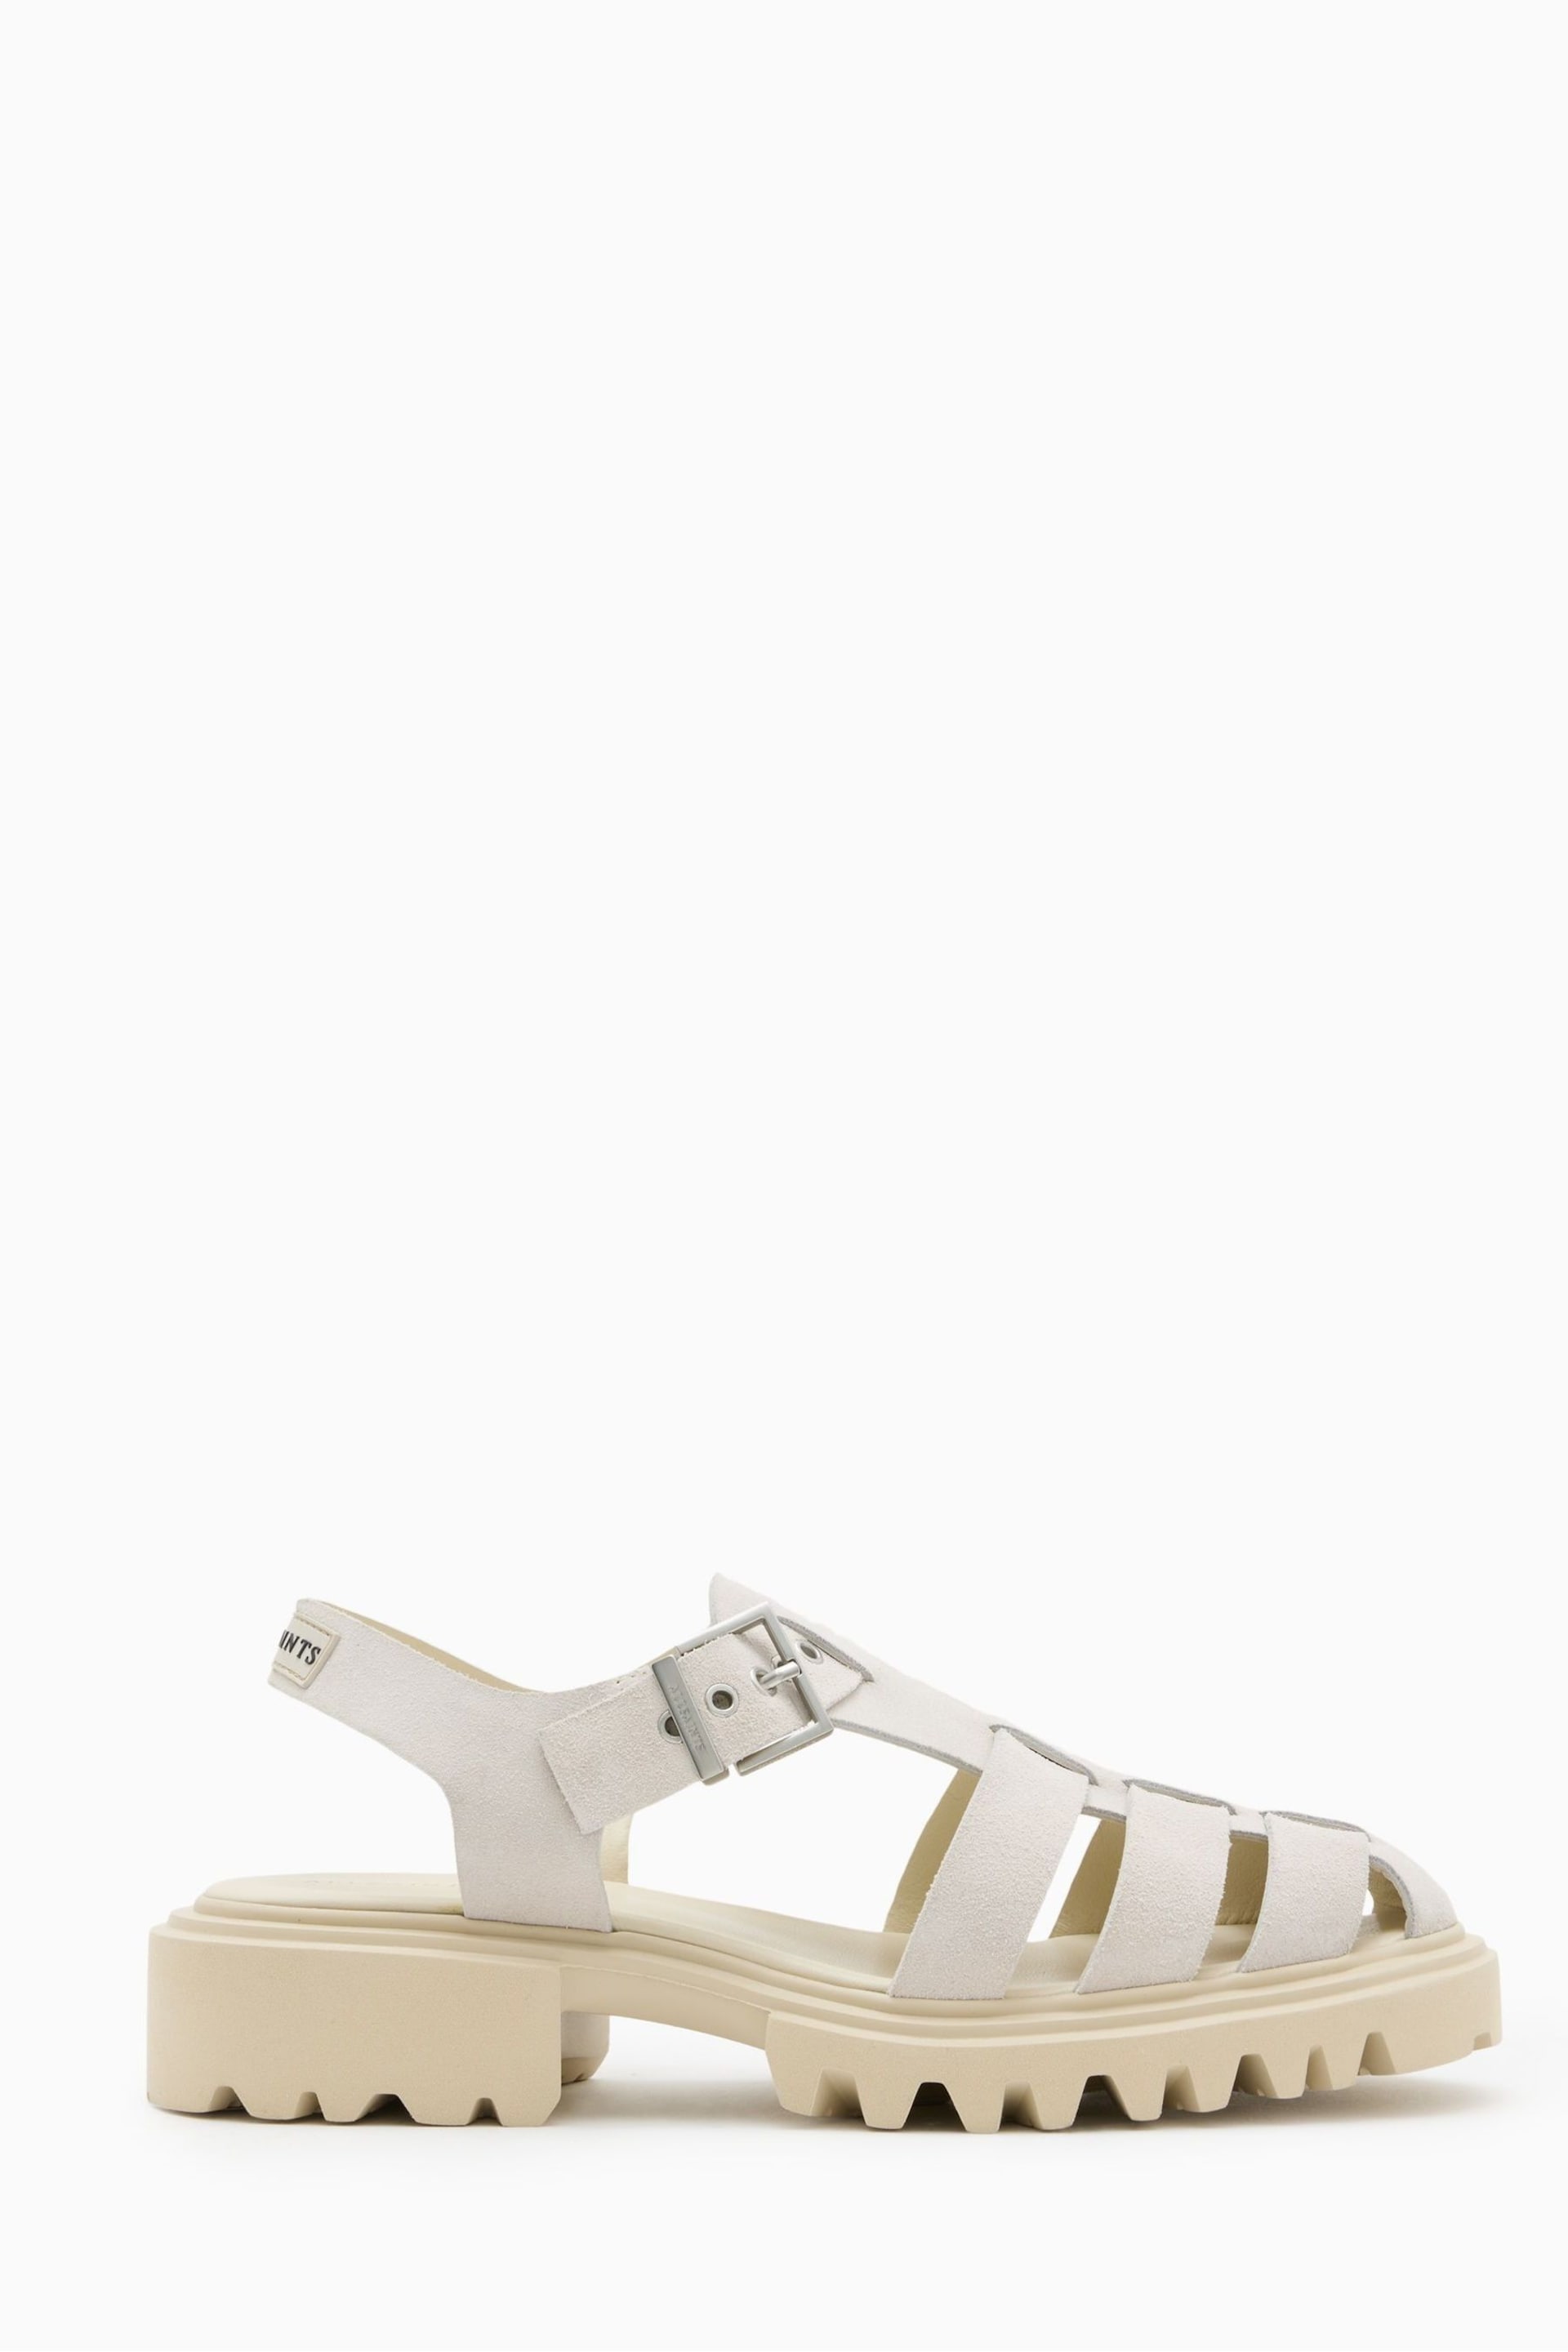 AllSaints White Nessa Sandals - Image 1 of 5